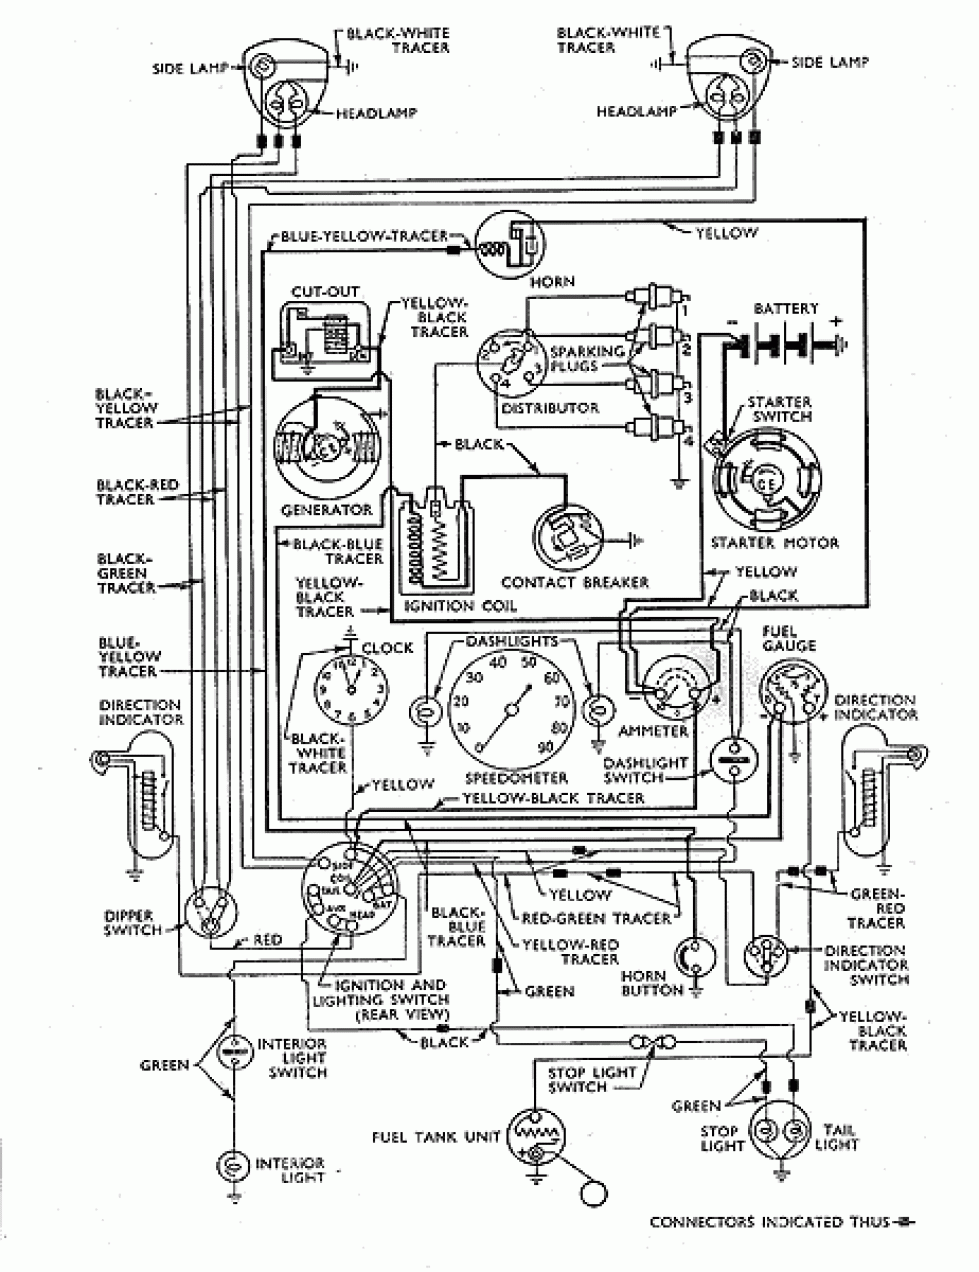 130: wiring diagram Prefect 3 brush dynamo pre 1945 | Ford ... 1970 dodge truck wiring diagrams 